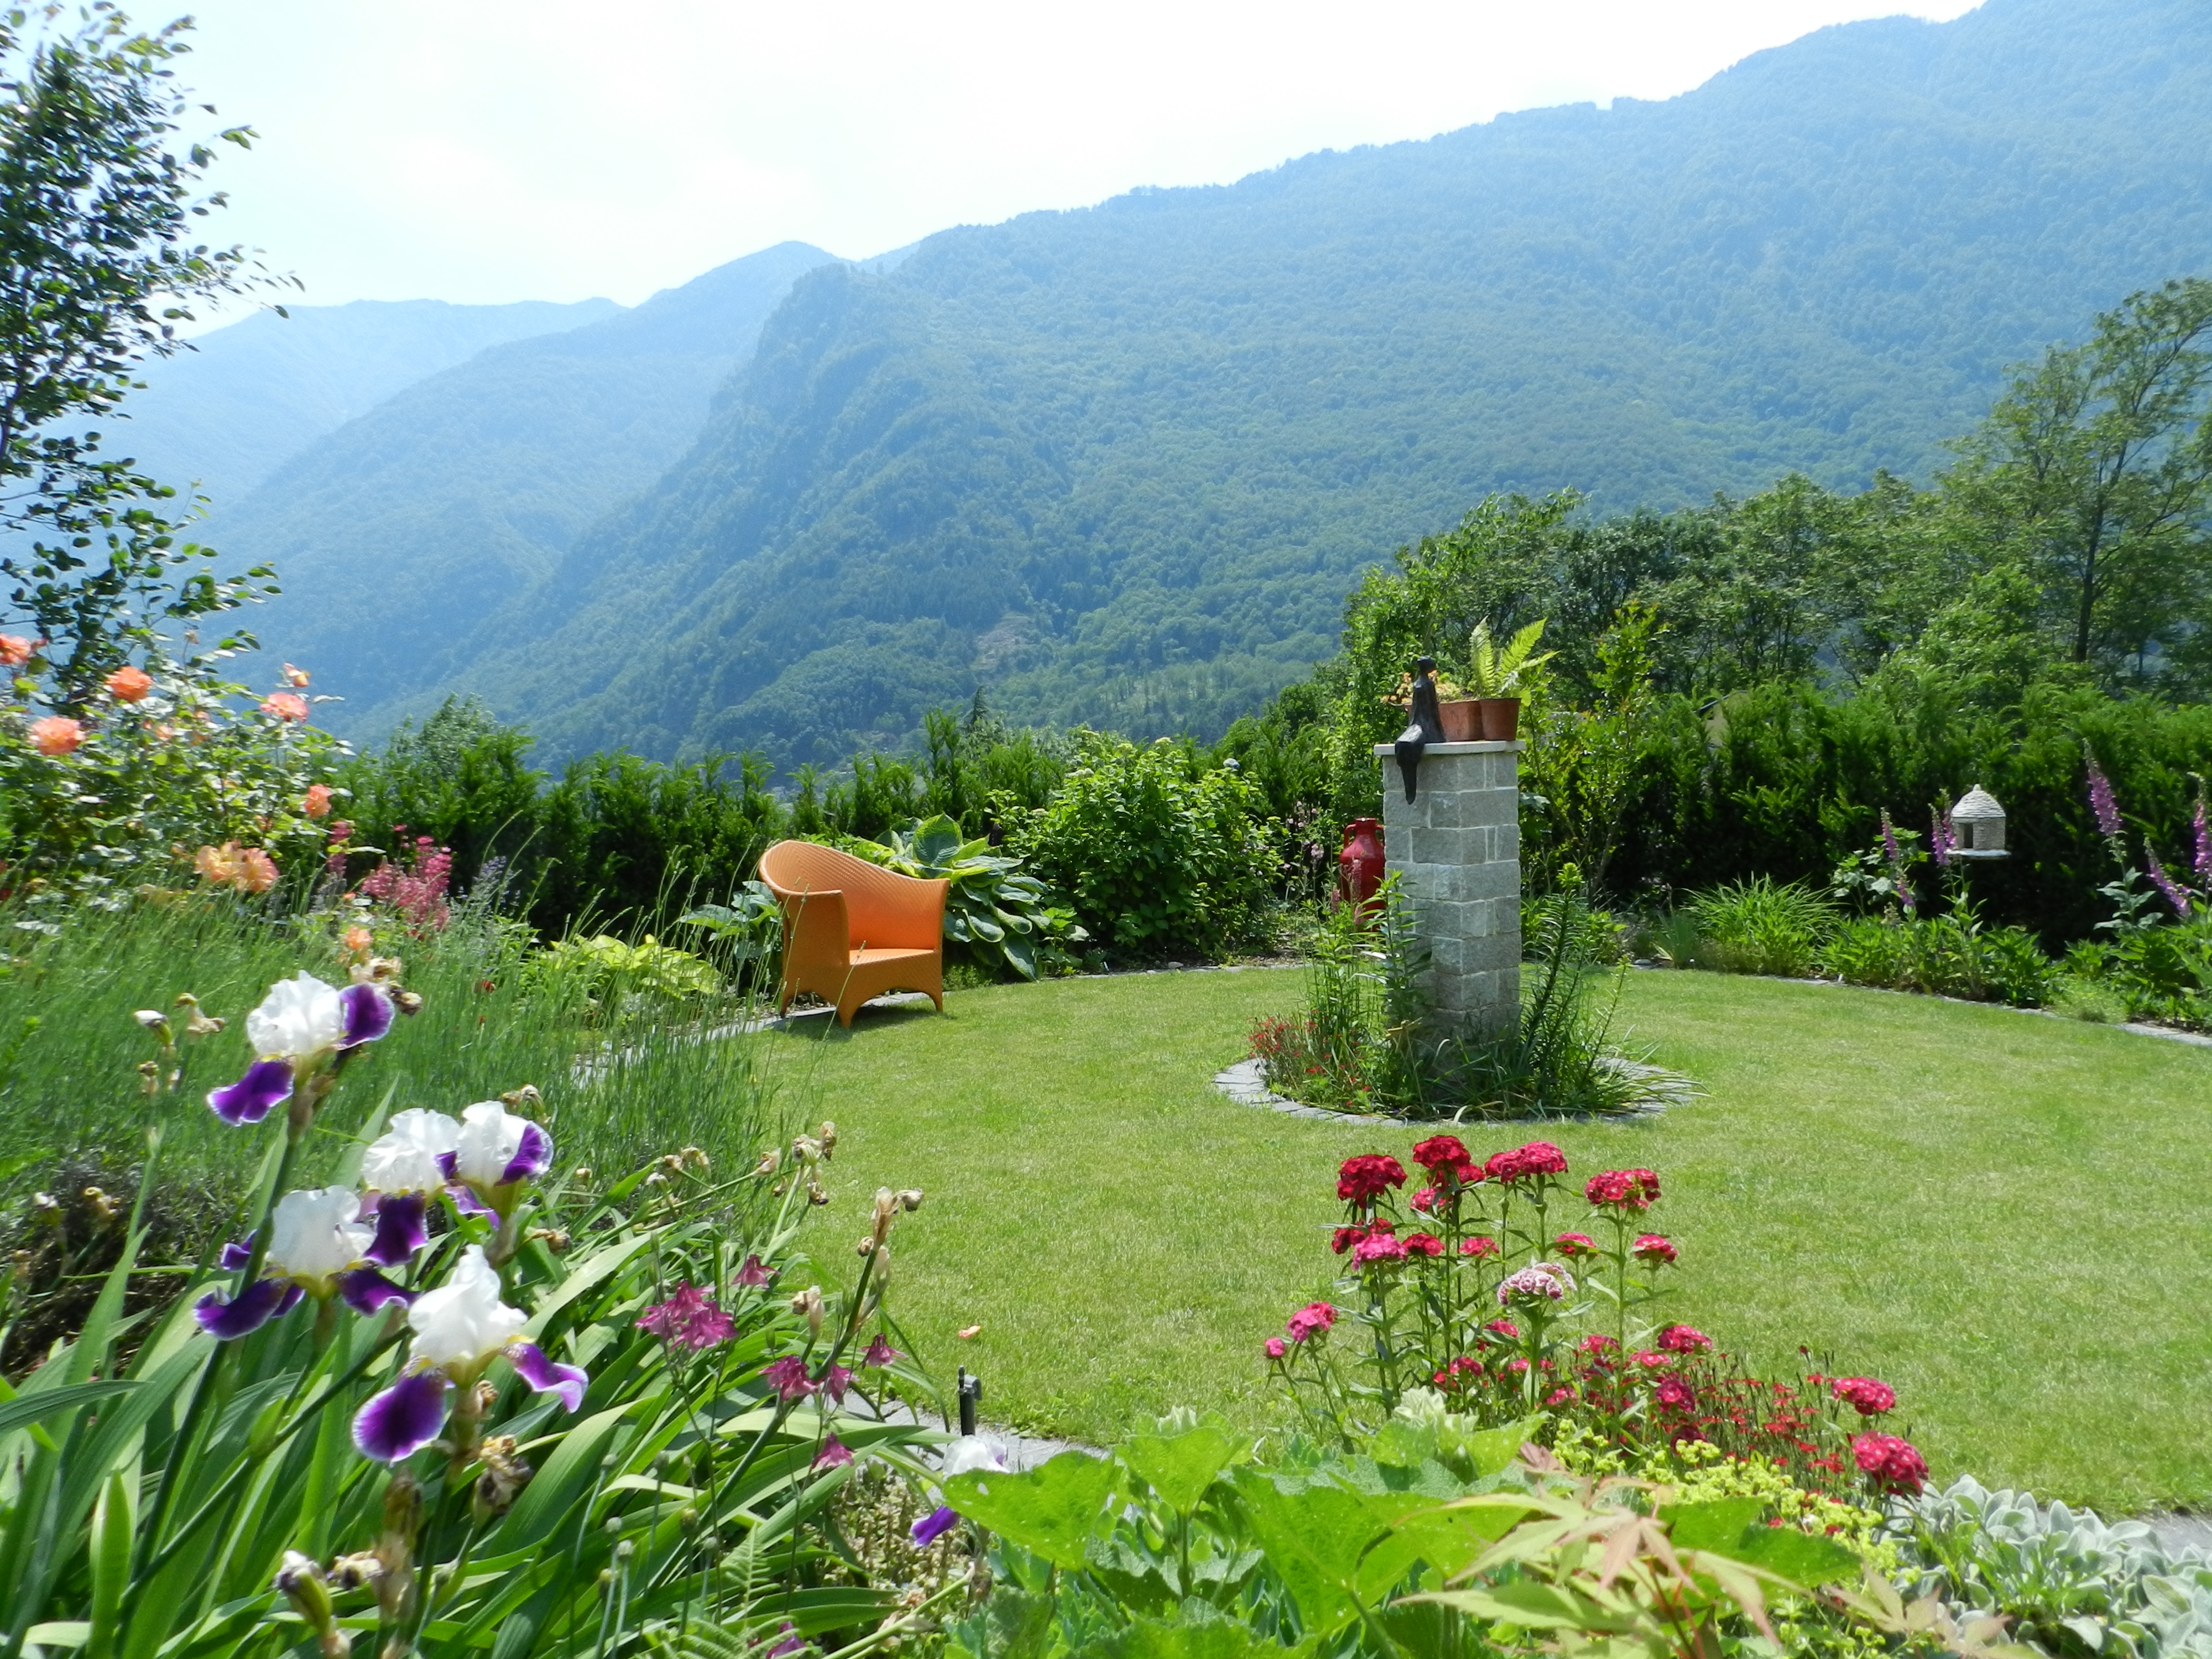 Casa alla Cascata (Maison prés de la cascade) gîte de vacances Maggia Vallemaggia Tessin Ticino